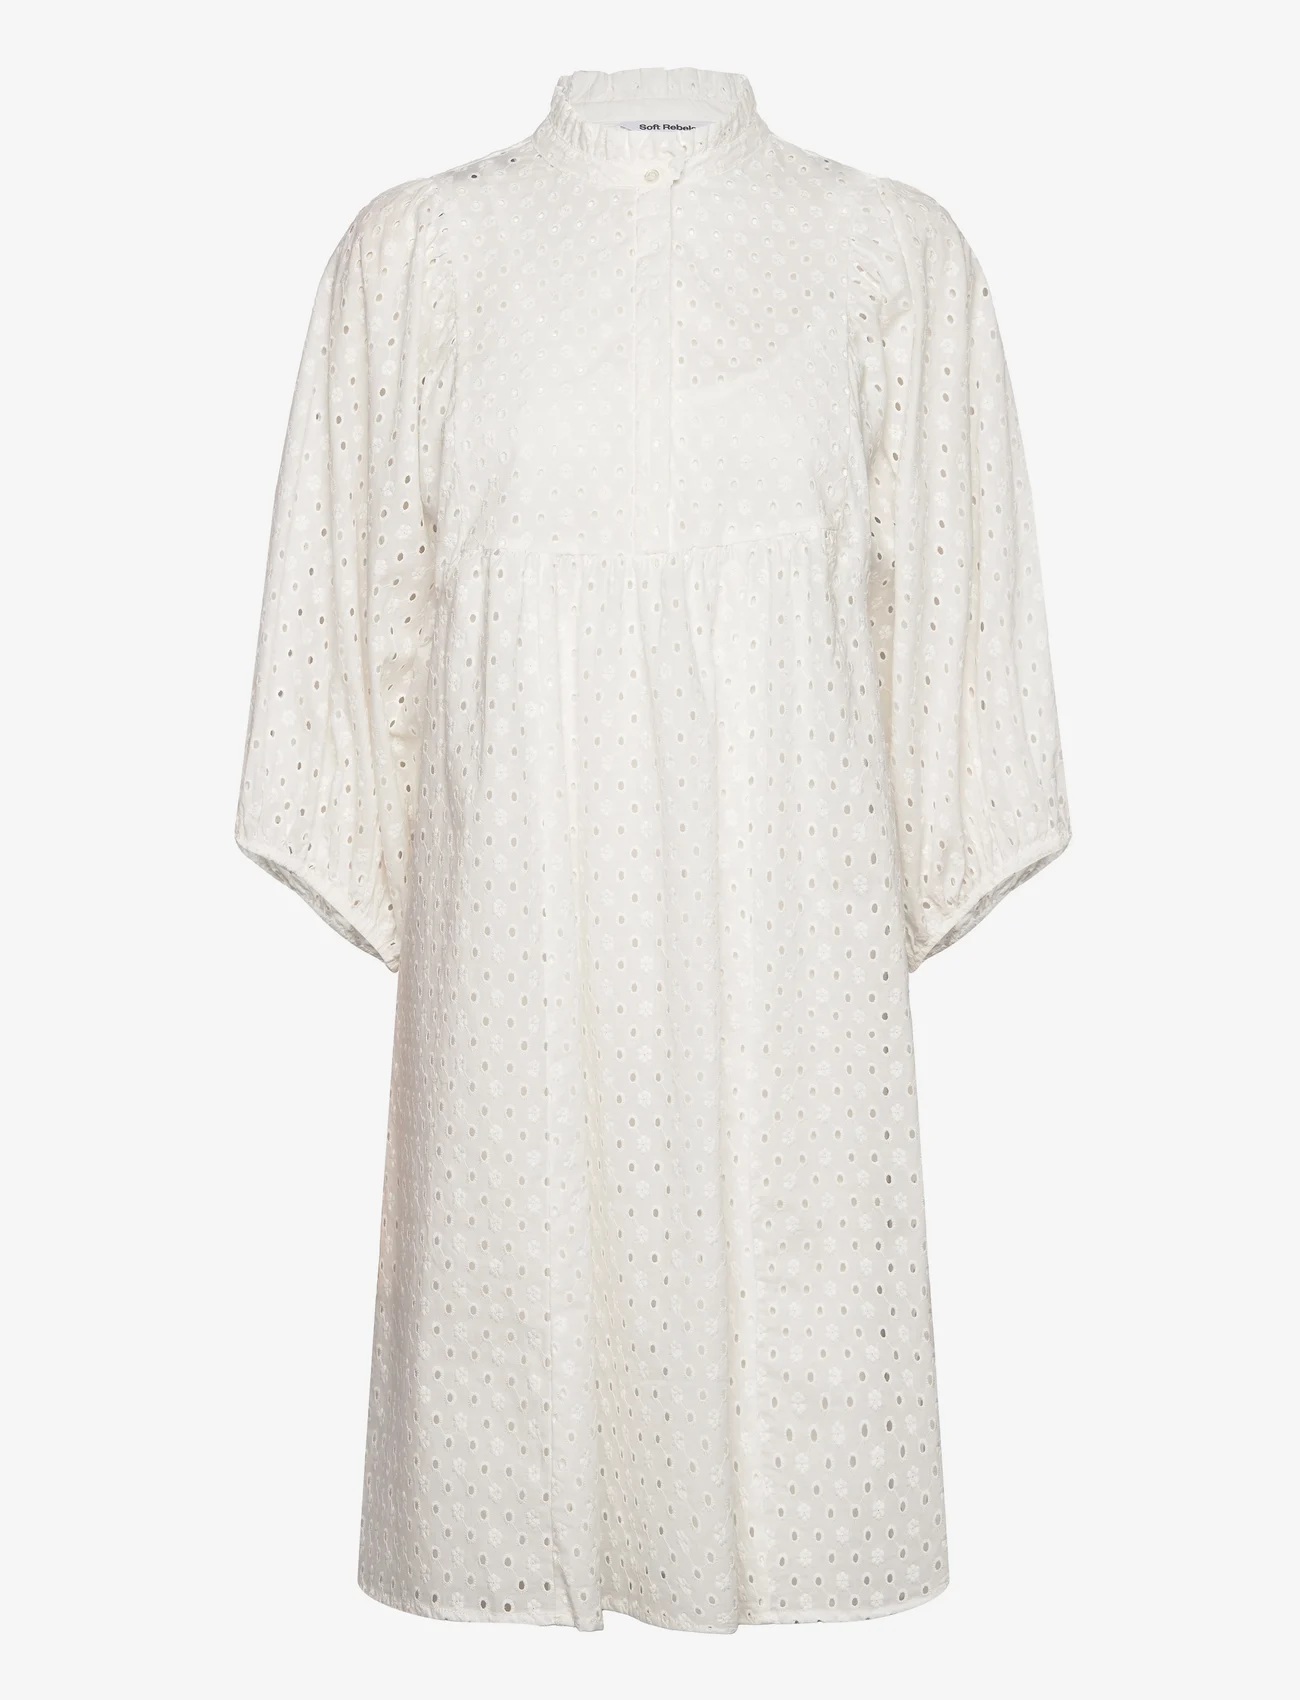 Soft Rebels - SRMarine Dress - shirt dresses - snow white - 0